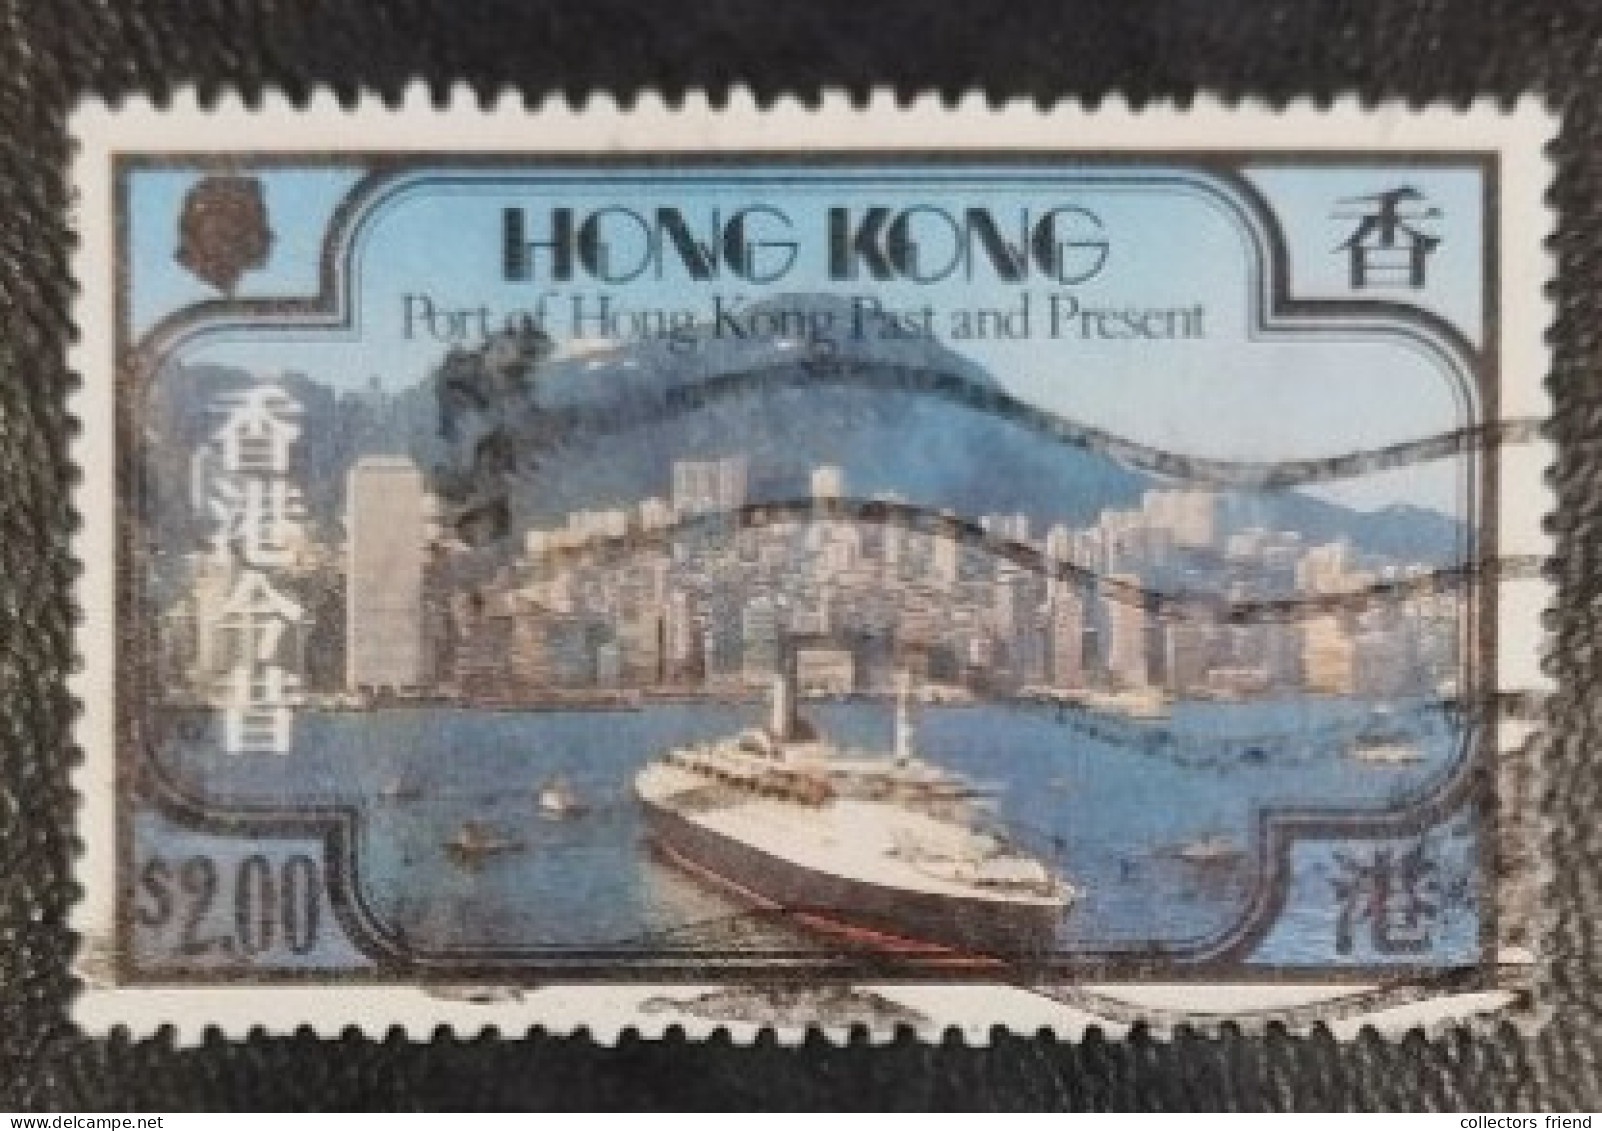 Hong Kong - 1982 - Hong Kong Port, Past And Present - Liner Queen Elizabeth 2 - Used - Usati